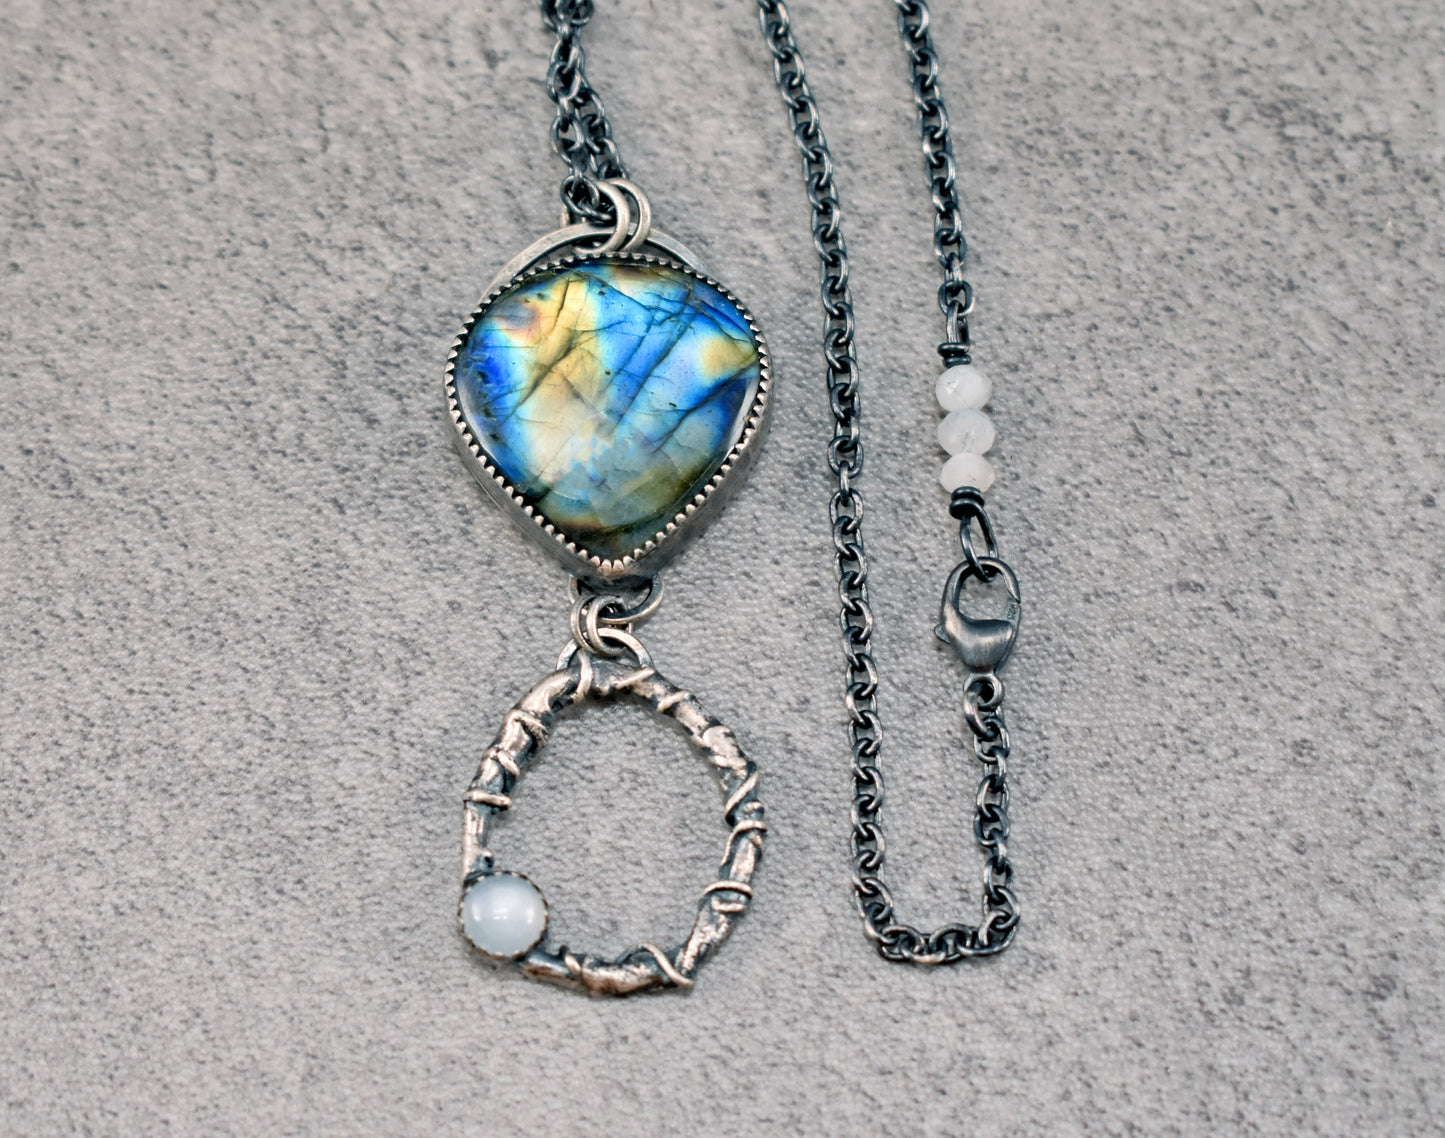 Labradorite, Moonstone and Sterling Silver Necklace, Rustic Silversmith Pendant, Artisan Handmade Jewelry